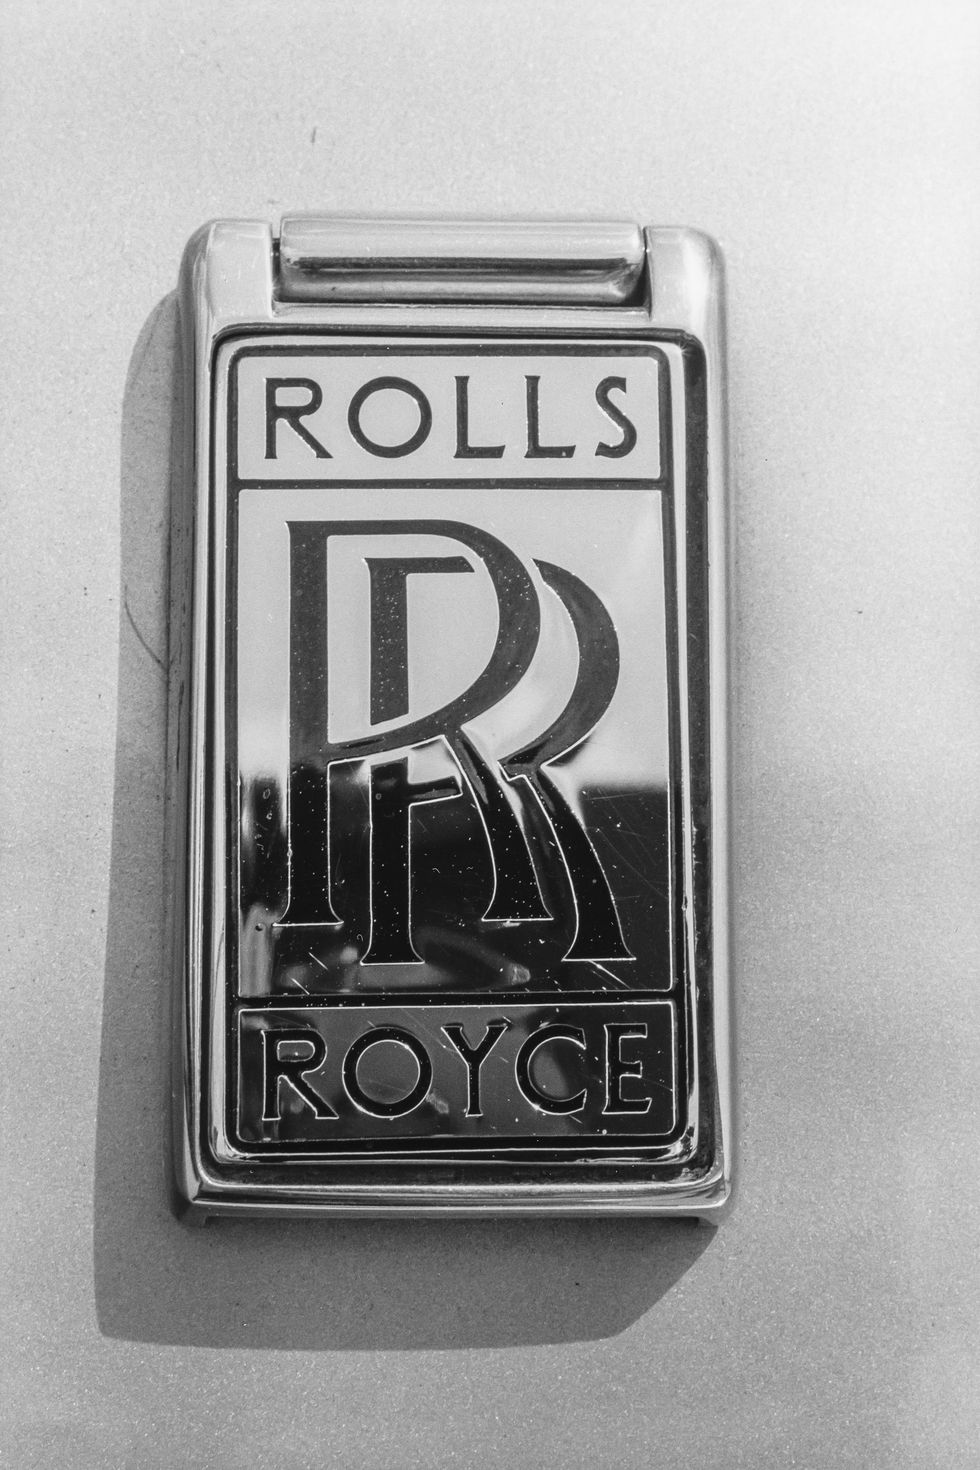 1981 rolls royce silver spirit